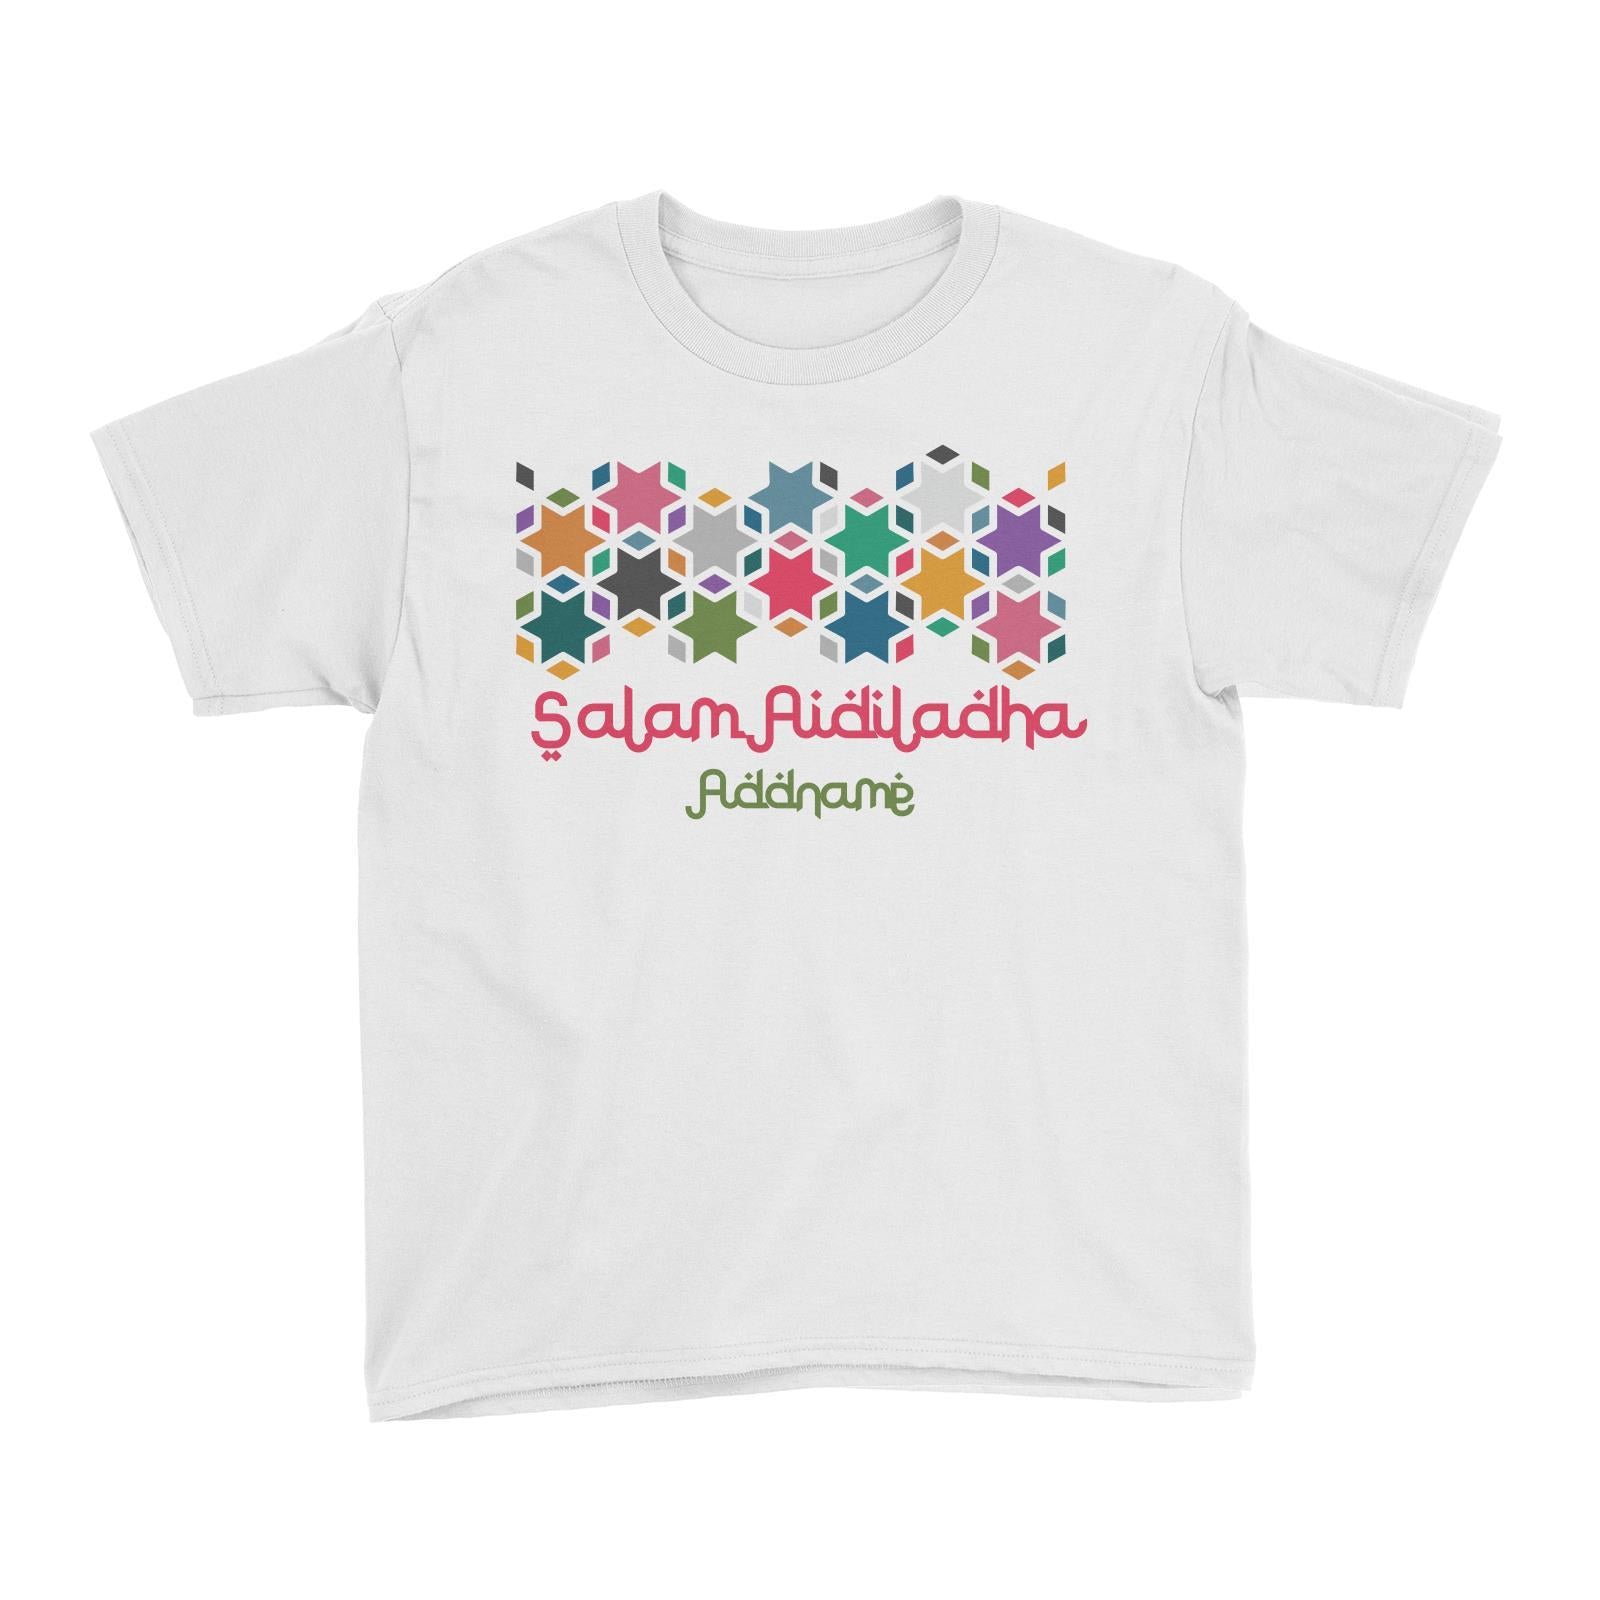 Salam Aidiladha Star Motifs Addname Kid's T-Shirt